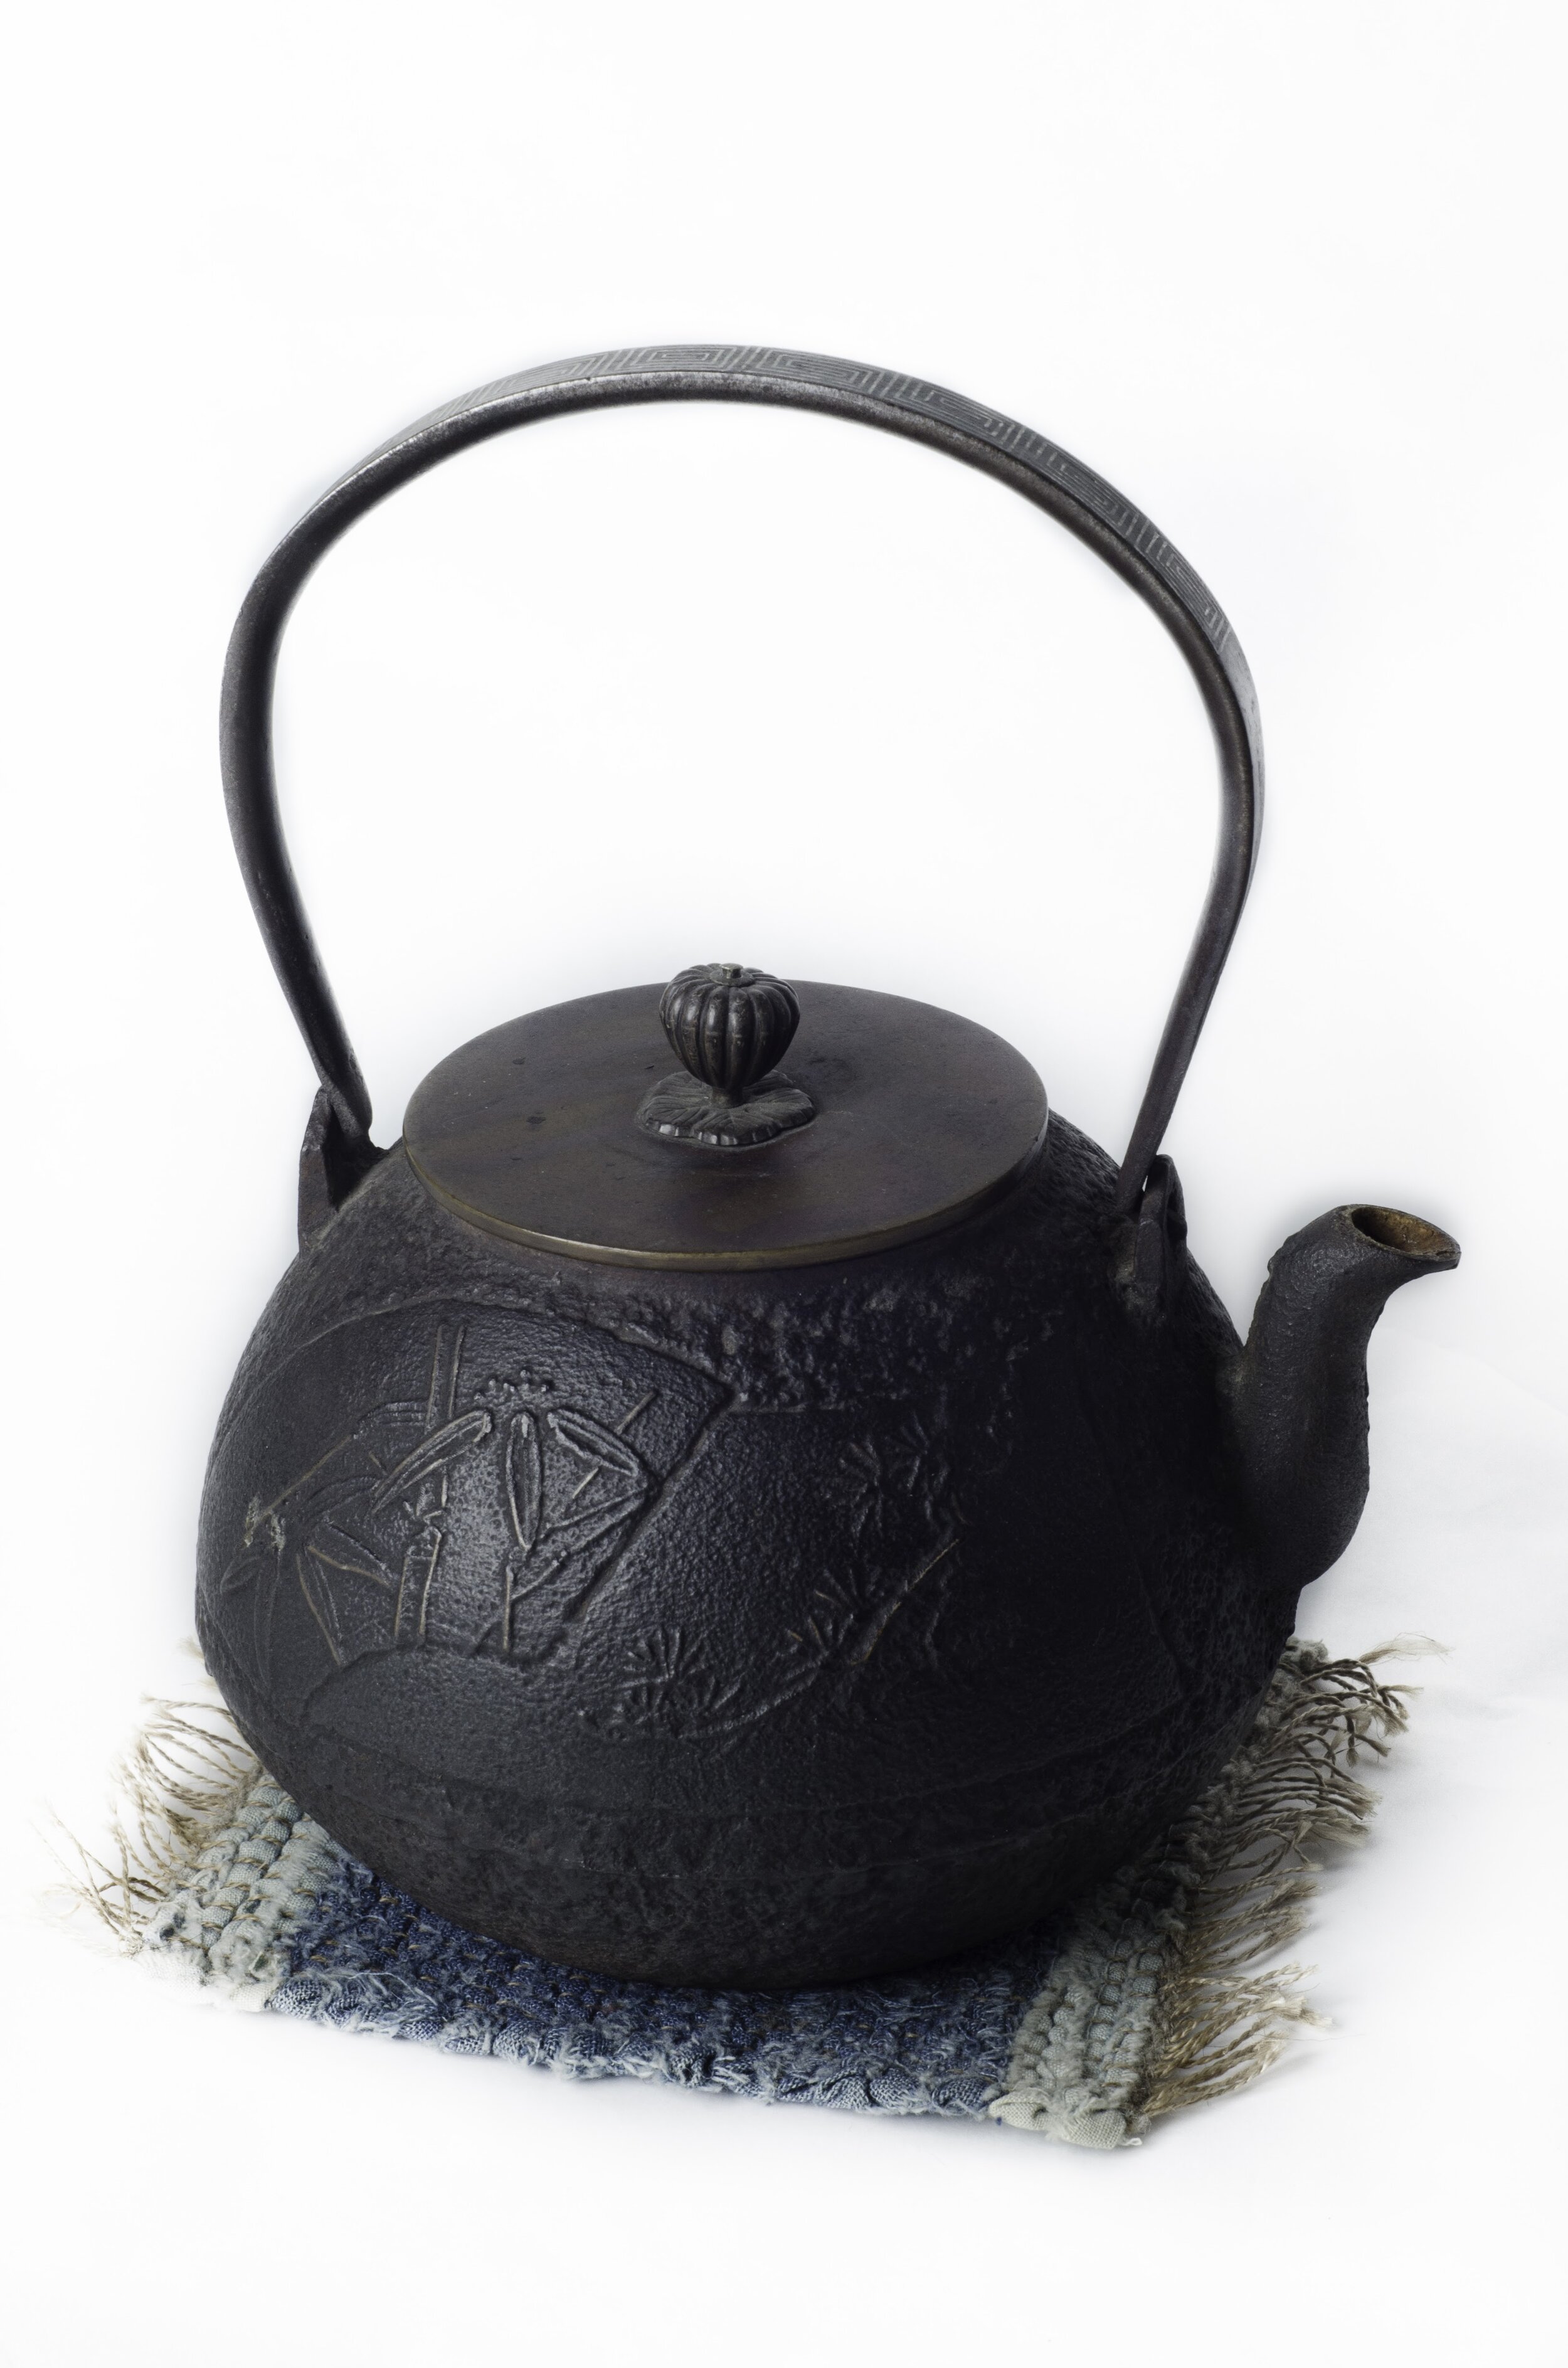 Ancient Tea Kettle from Takamatsu